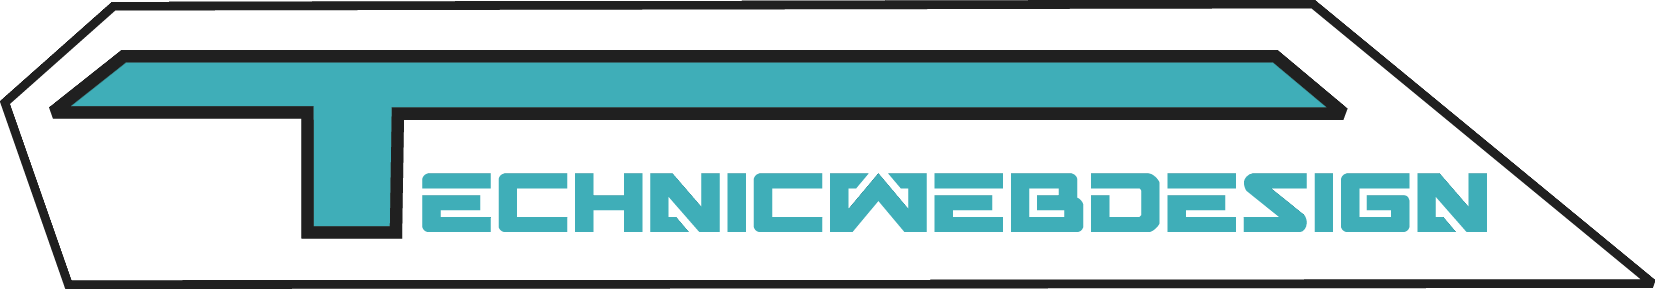 Technicwebdesign logo